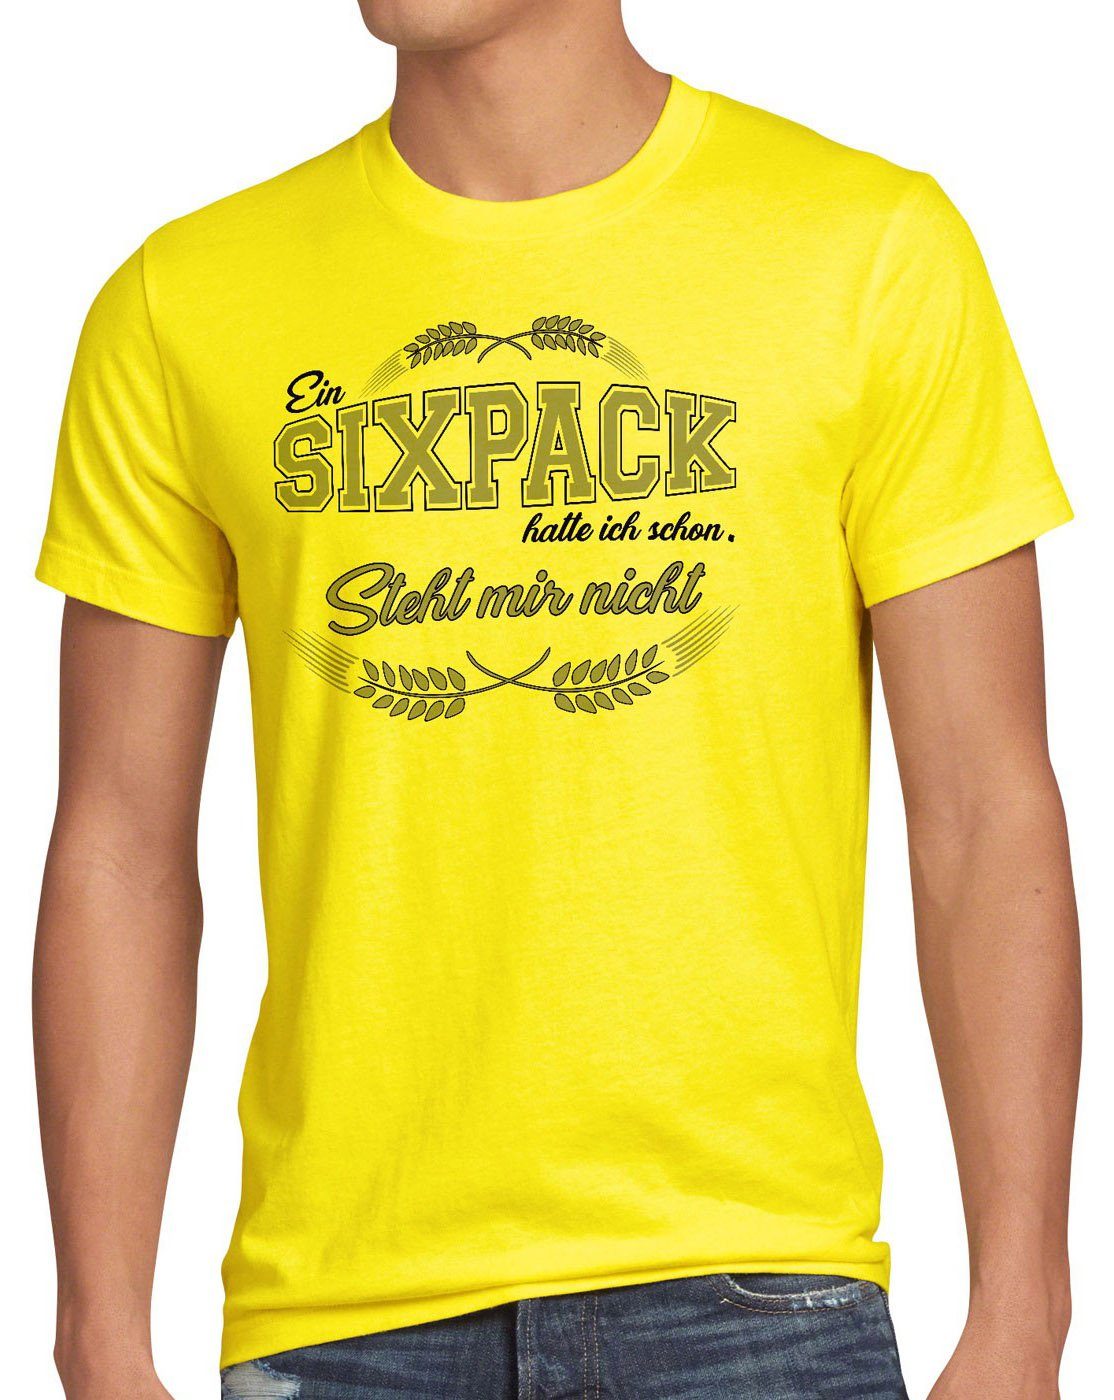 style3 Print-Shirt Herren T-Shirt Sixpack hatte ich steht mir nicht Funshirt Shirt Bier Fun Spruch gelb